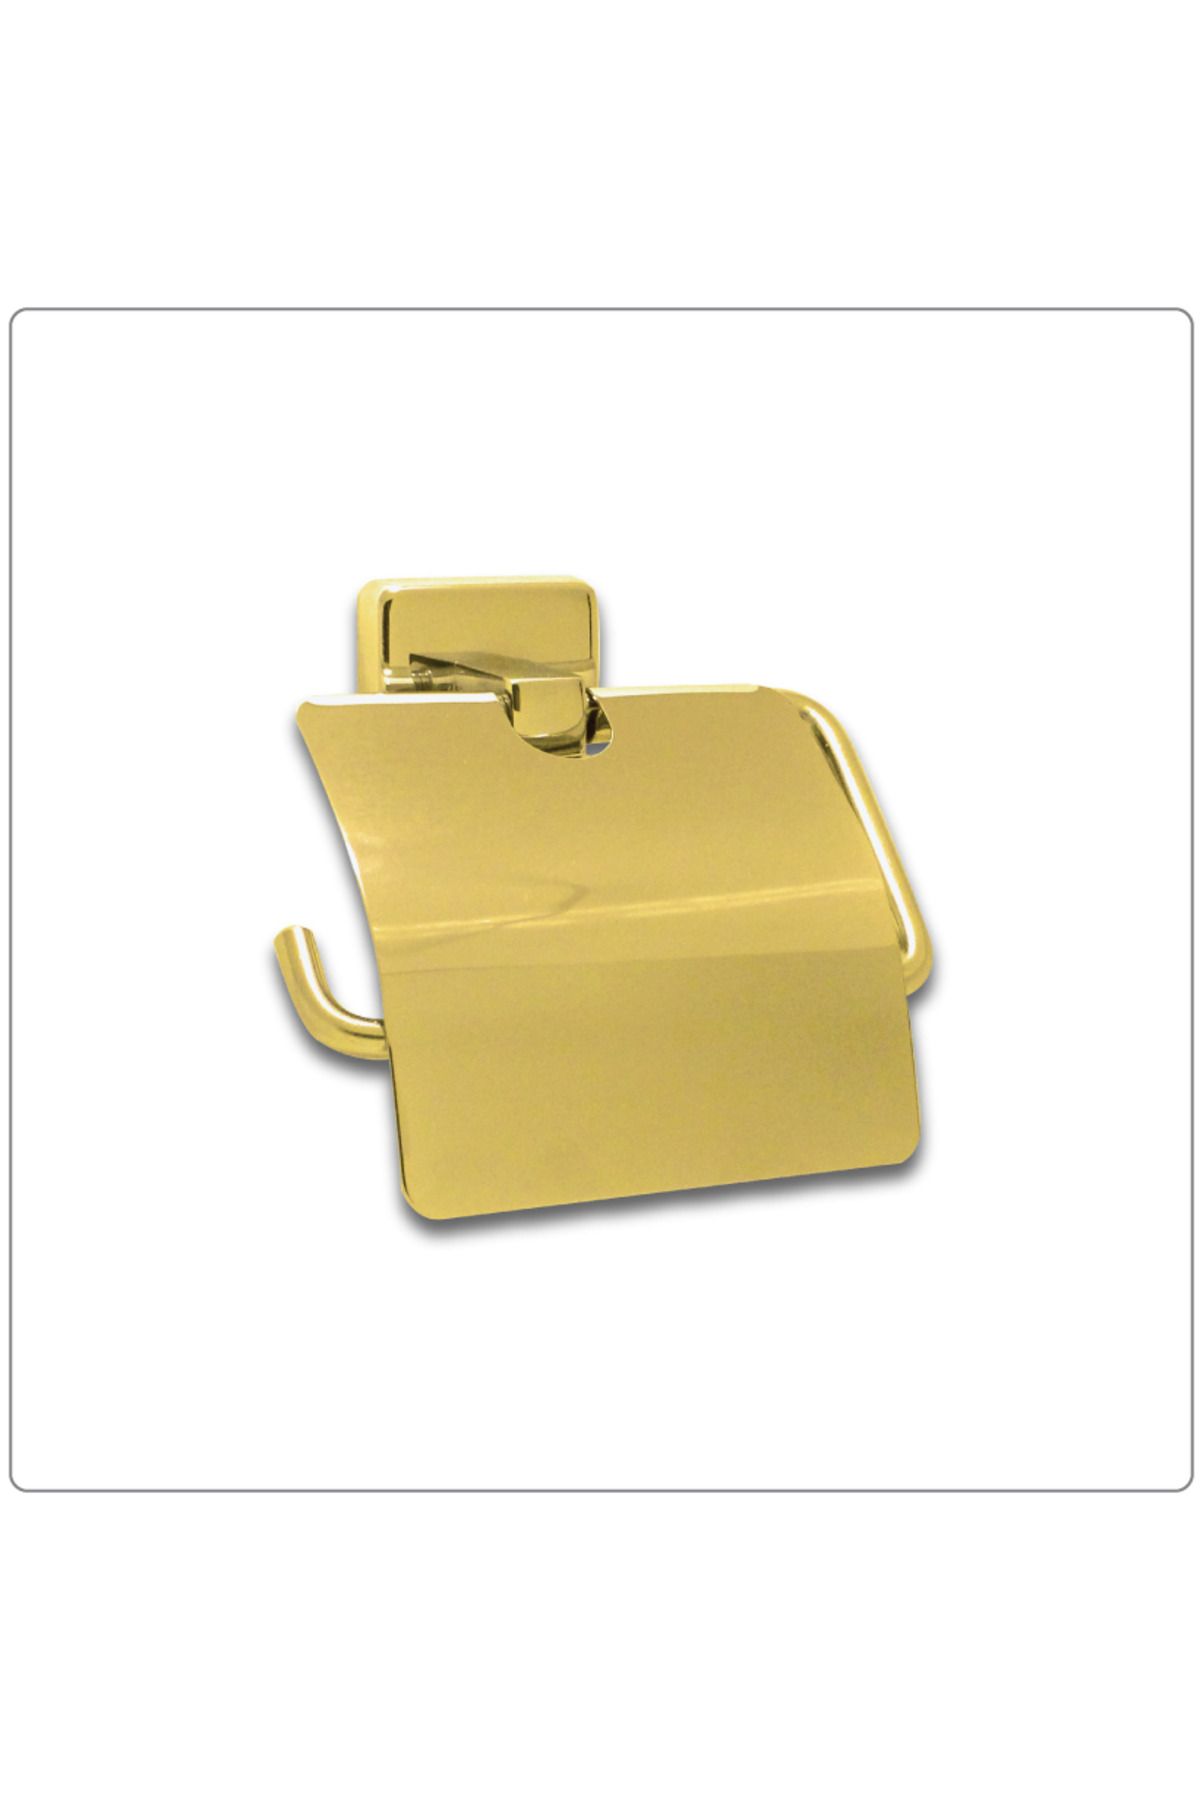 banyosepeti Siyah Kapaklı Tuvalet Kağıtlığı Gold Altın Tuvalet Kağıtlığı Lüks Krom Pirinç Tuvalet Kağıtlığı